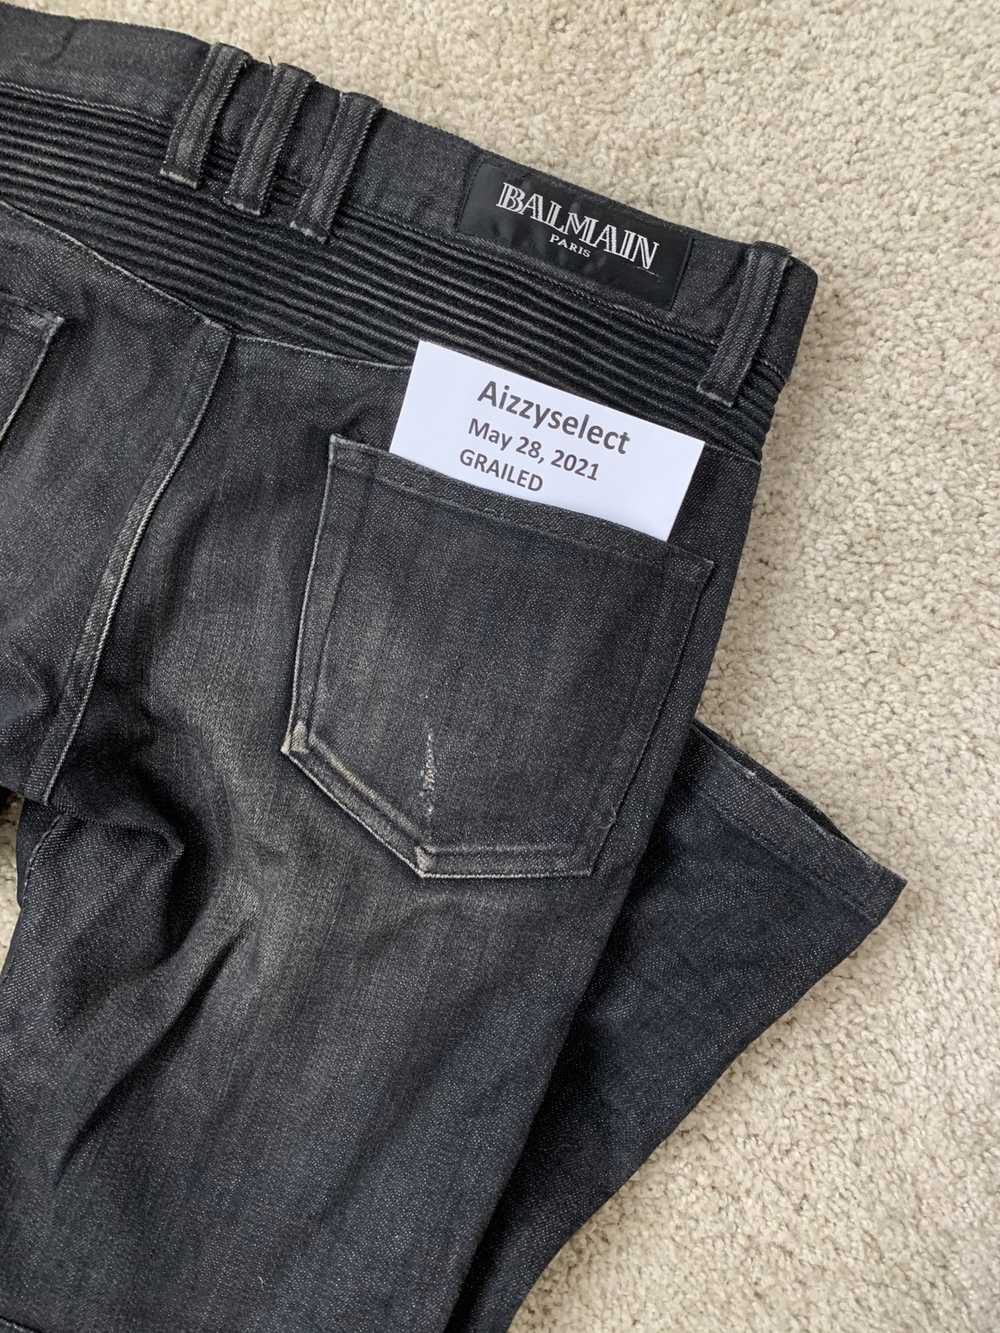 Balmain BALMAIN Ribbed Patches Slim Jeans - image 6